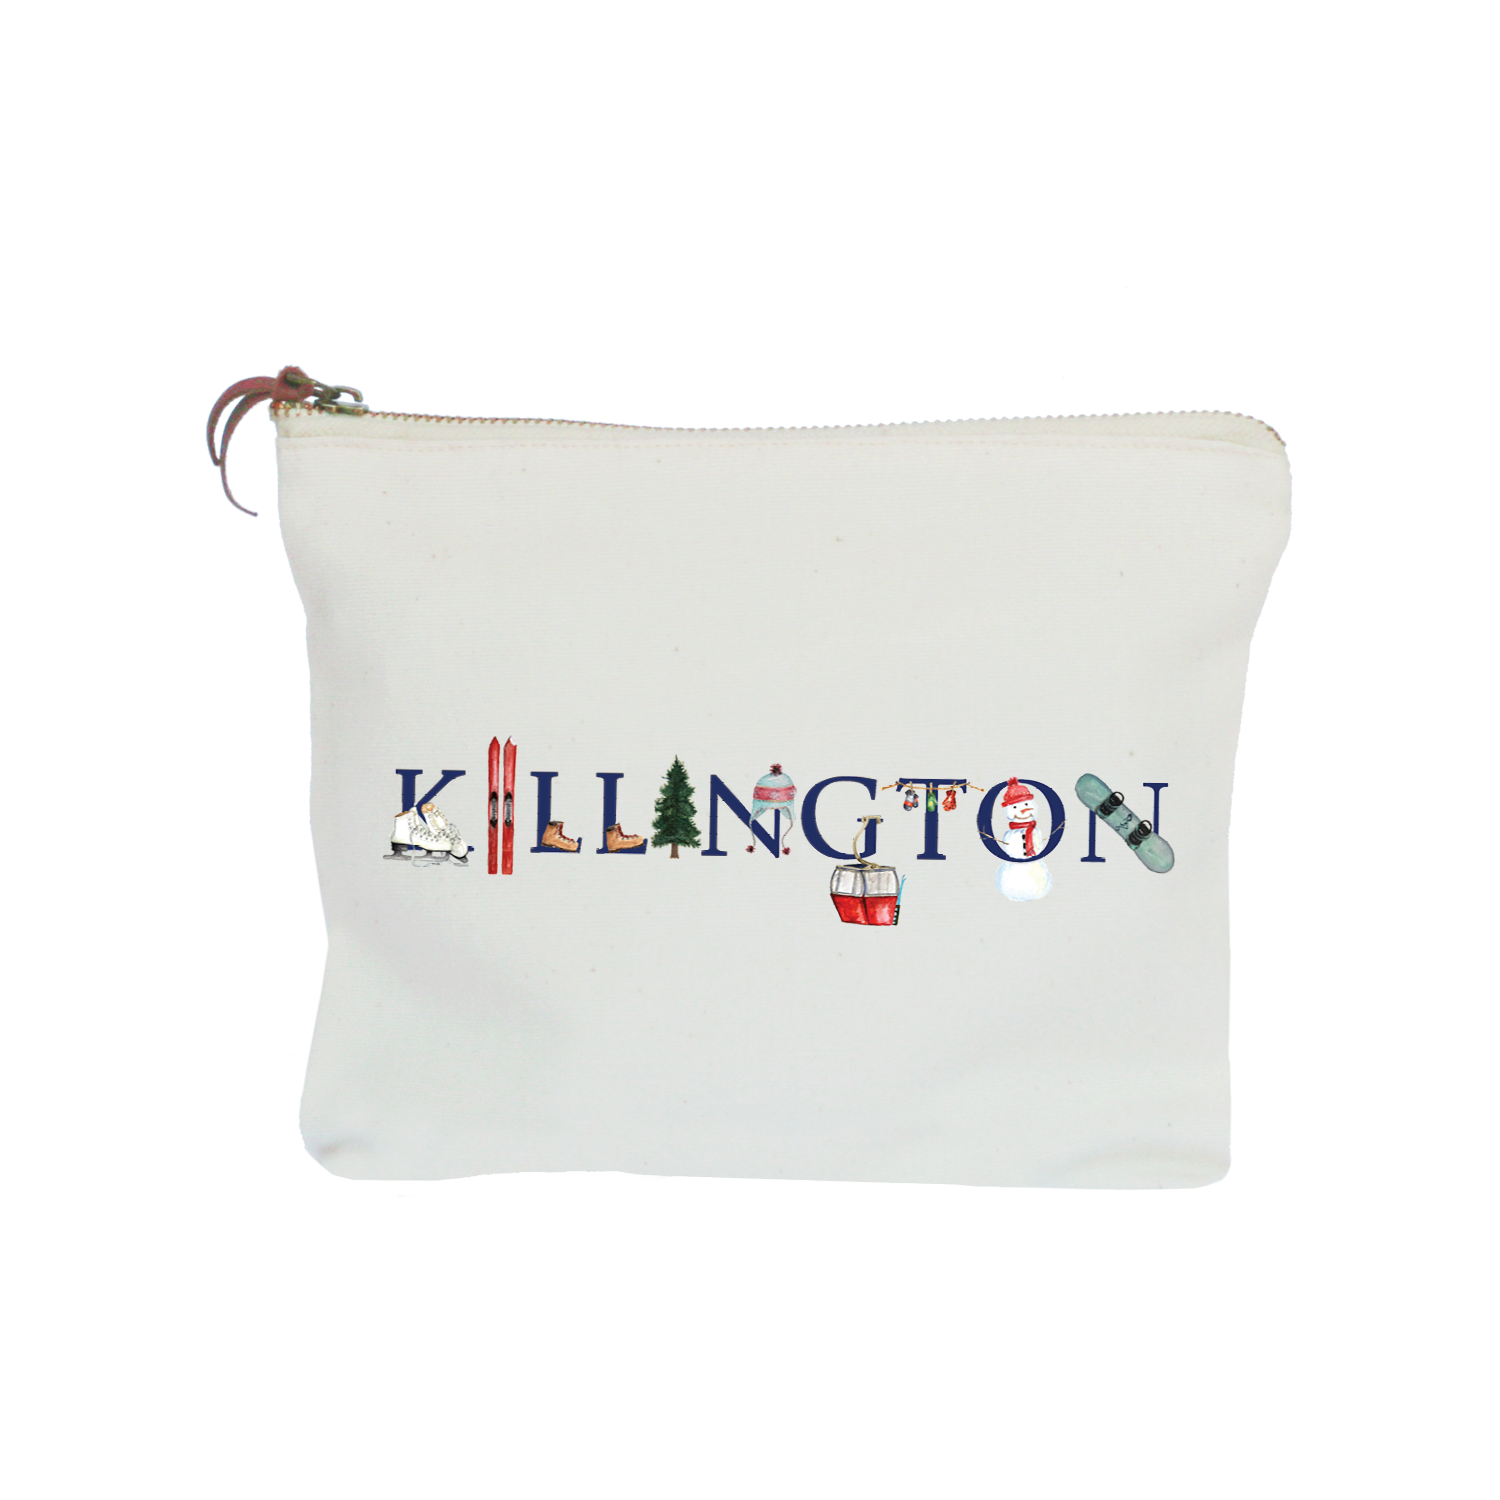 Killington zipper pouch